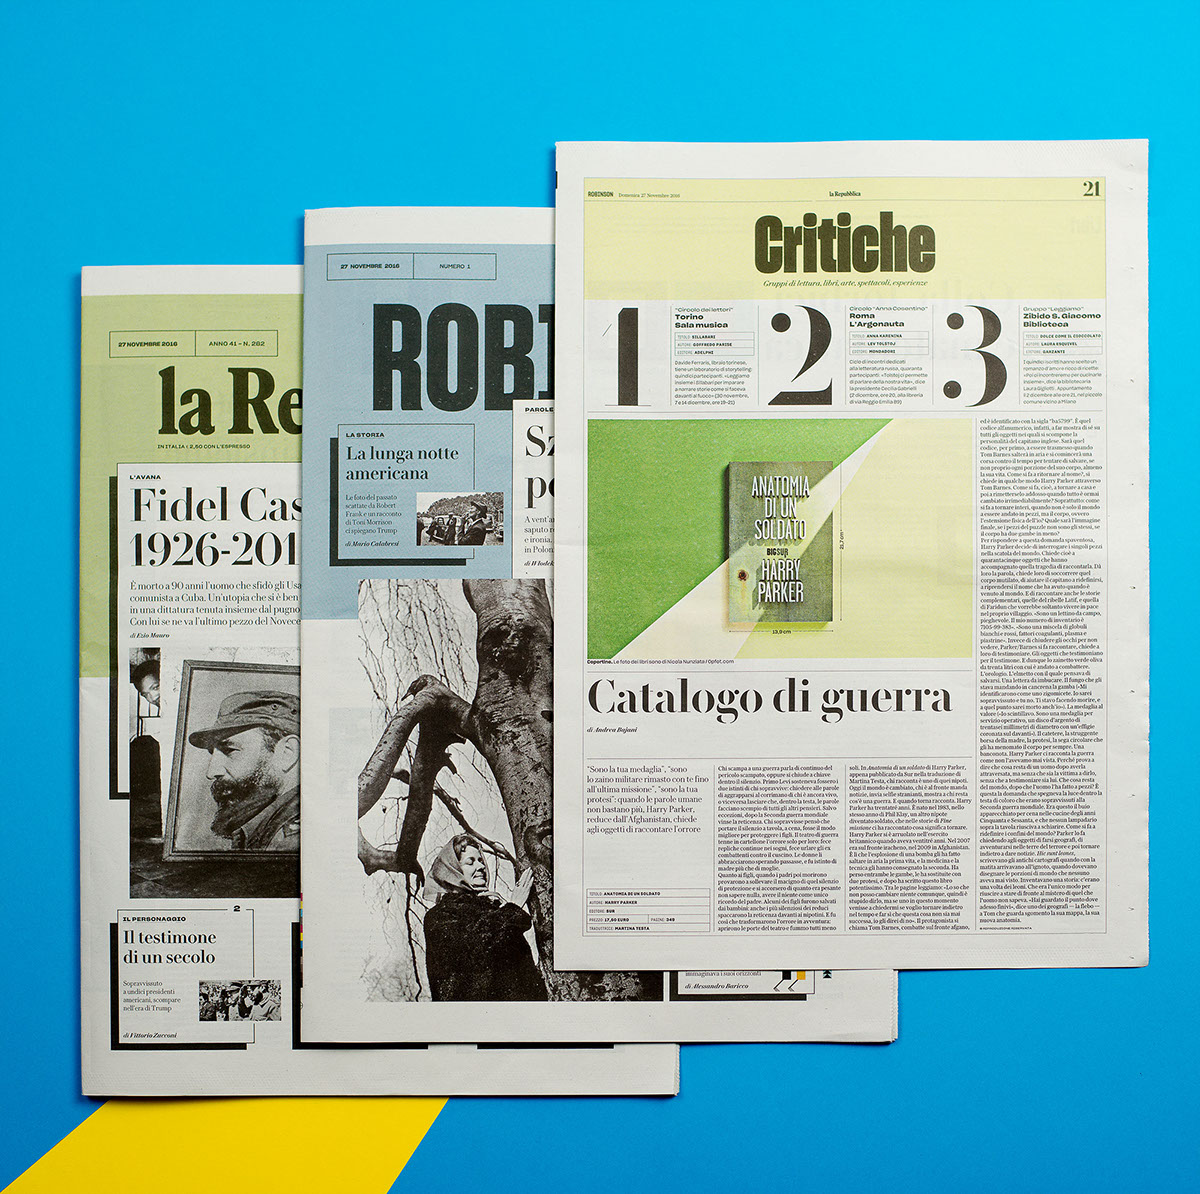 Robinson La Repubblica newspaper magazine Photography  books ILLUSTRATION  Stories writers readers